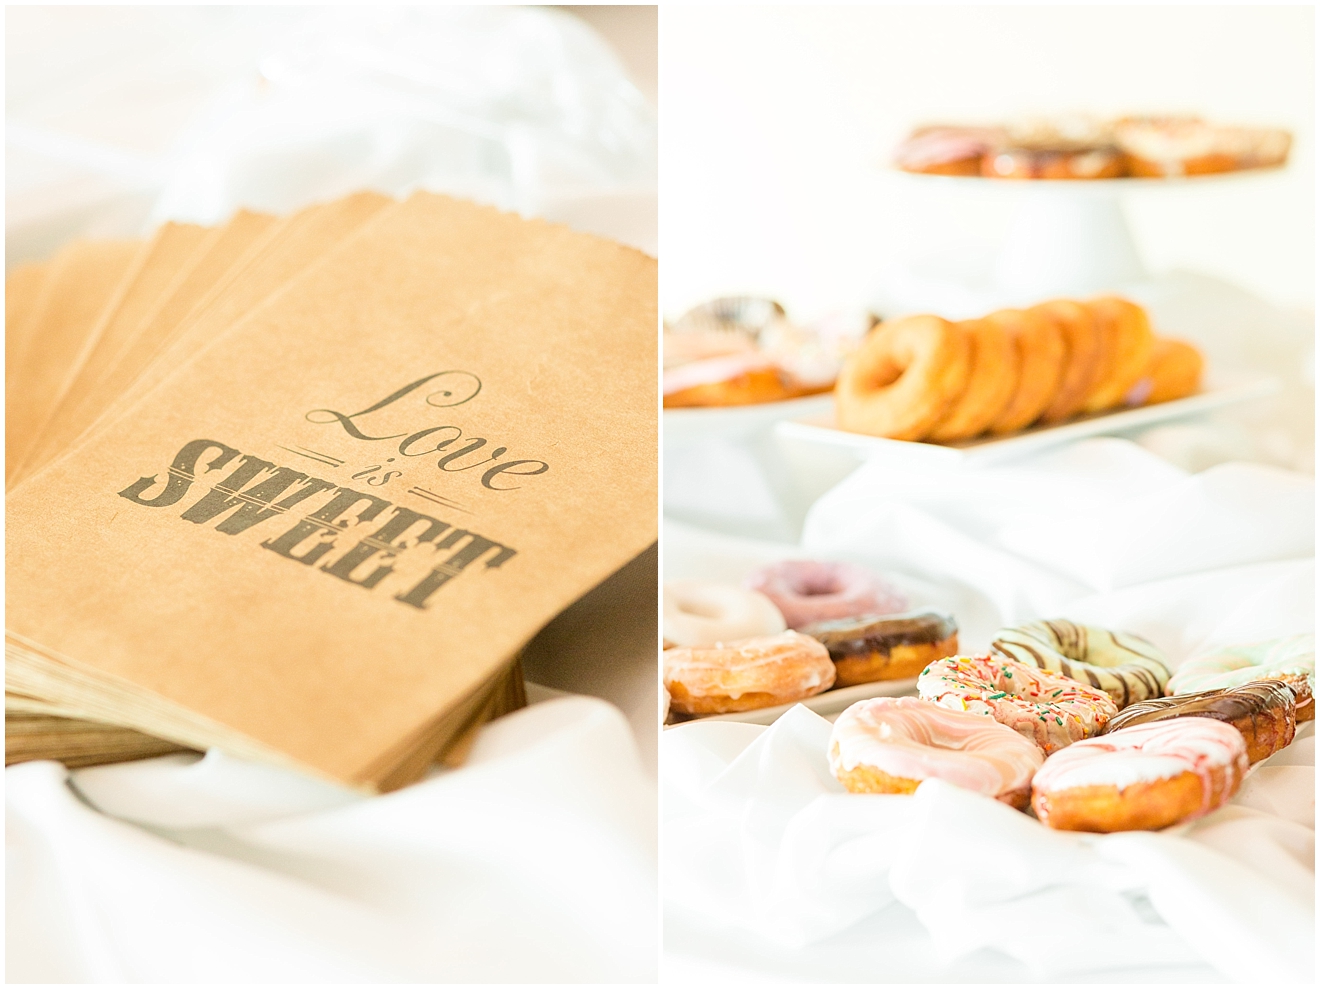 charlottesville-va-wedding-donuts